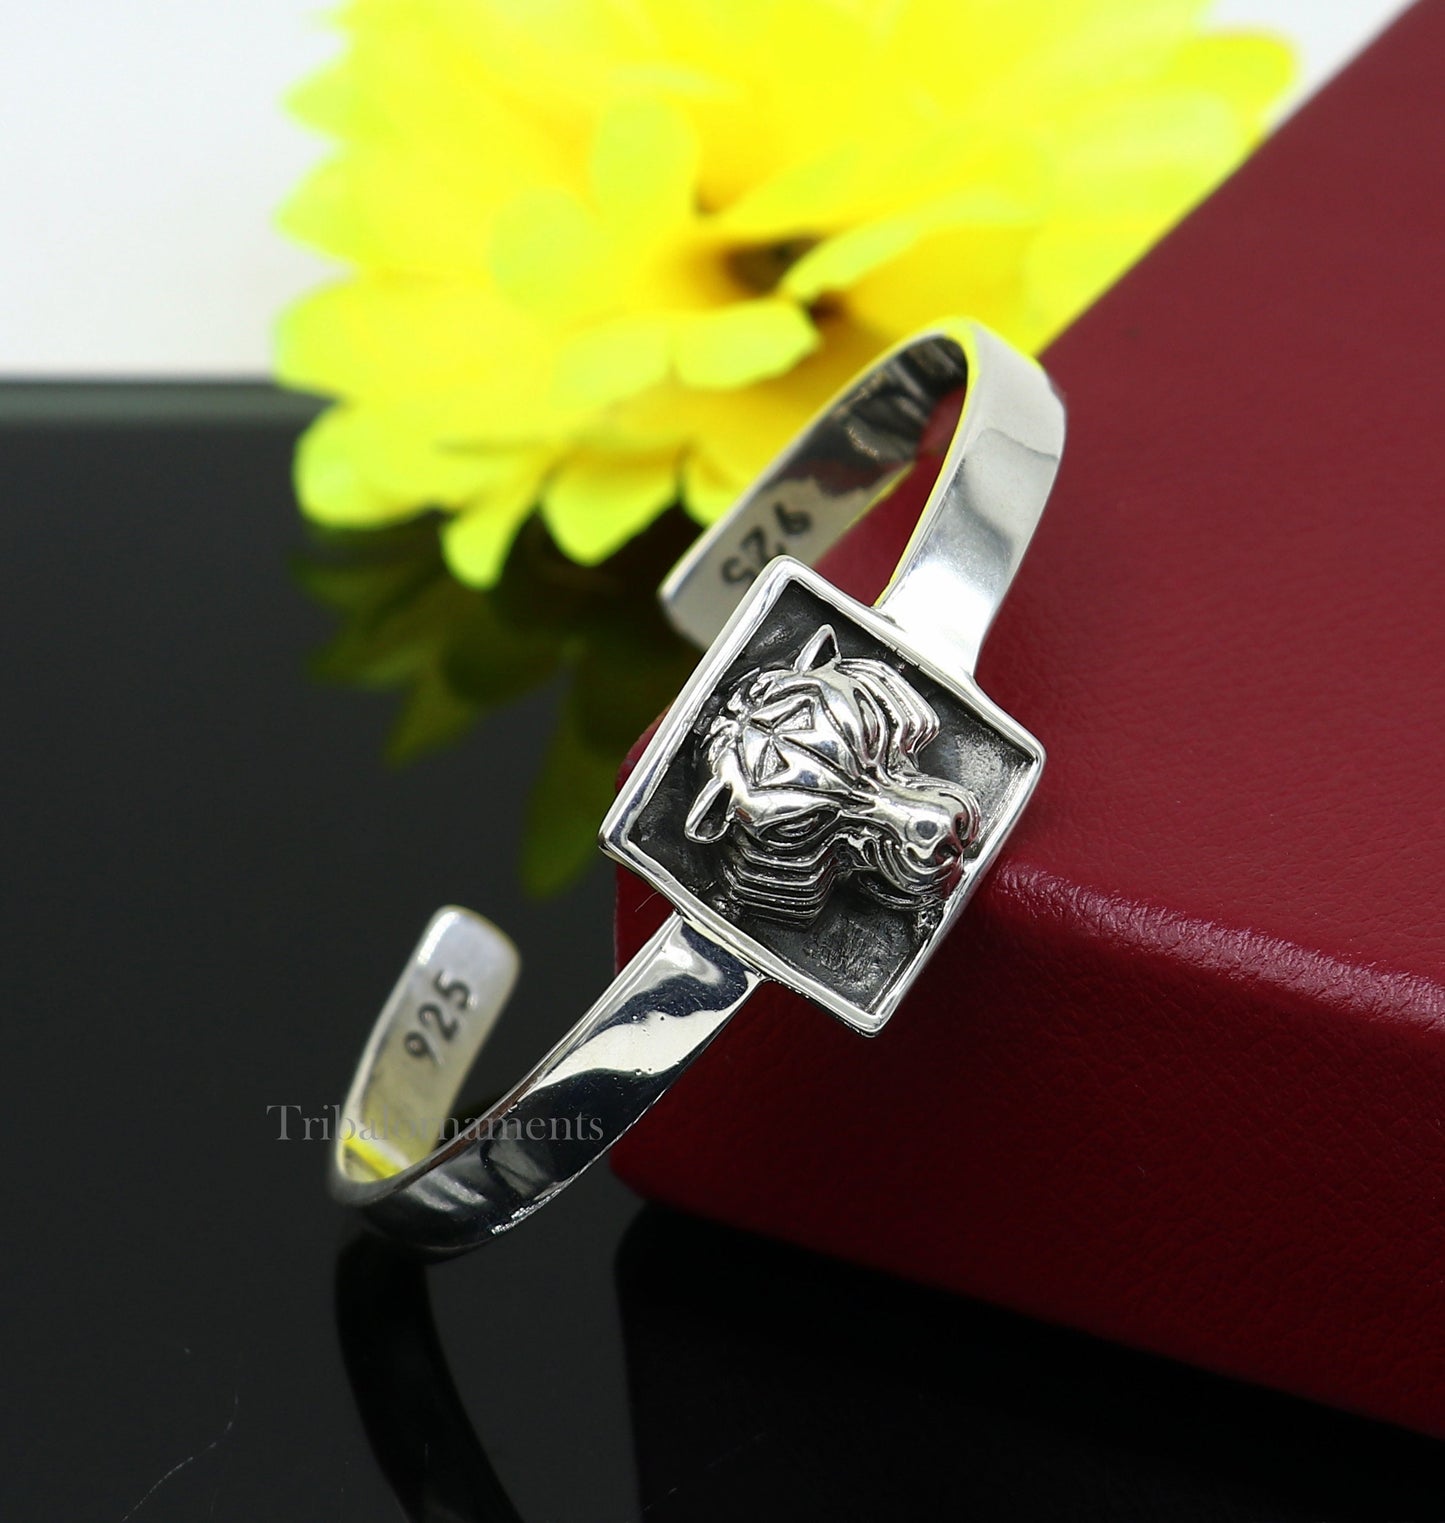 925 sterling silver handmade lion face design adjustable bangle cuff bracelet kada, best unisex gifting ethnic jewelry india nsk368 - TRIBAL ORNAMENTS